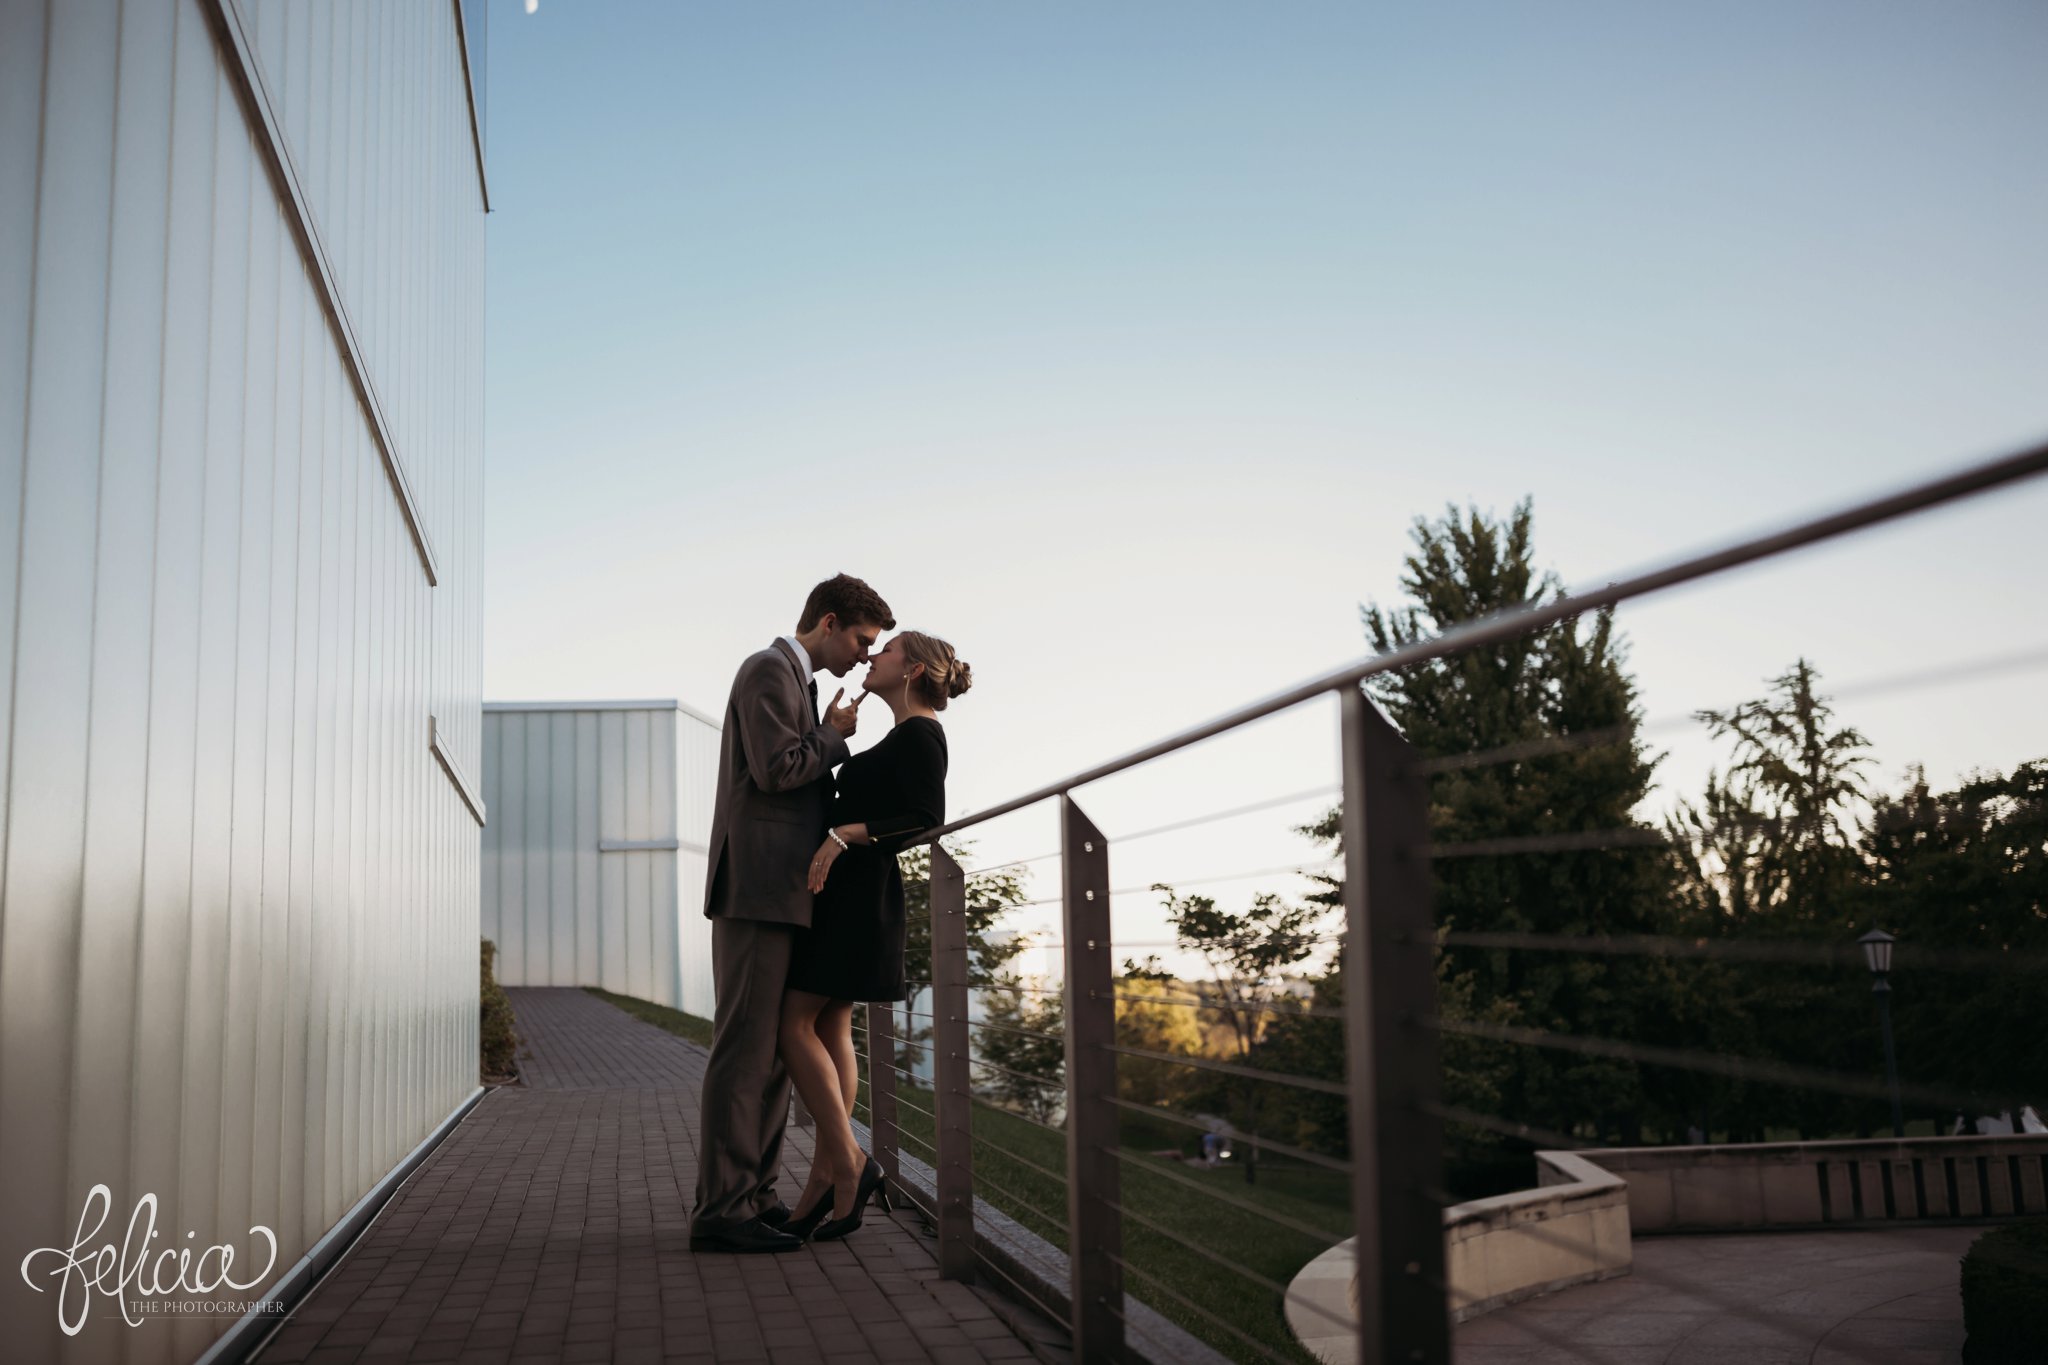 images by feliciathephotographer.com | wedding photographer | kansas city missouri | engagement | golden hour | sunset | romantic | classy | contrast | trees | nelson atkins | 